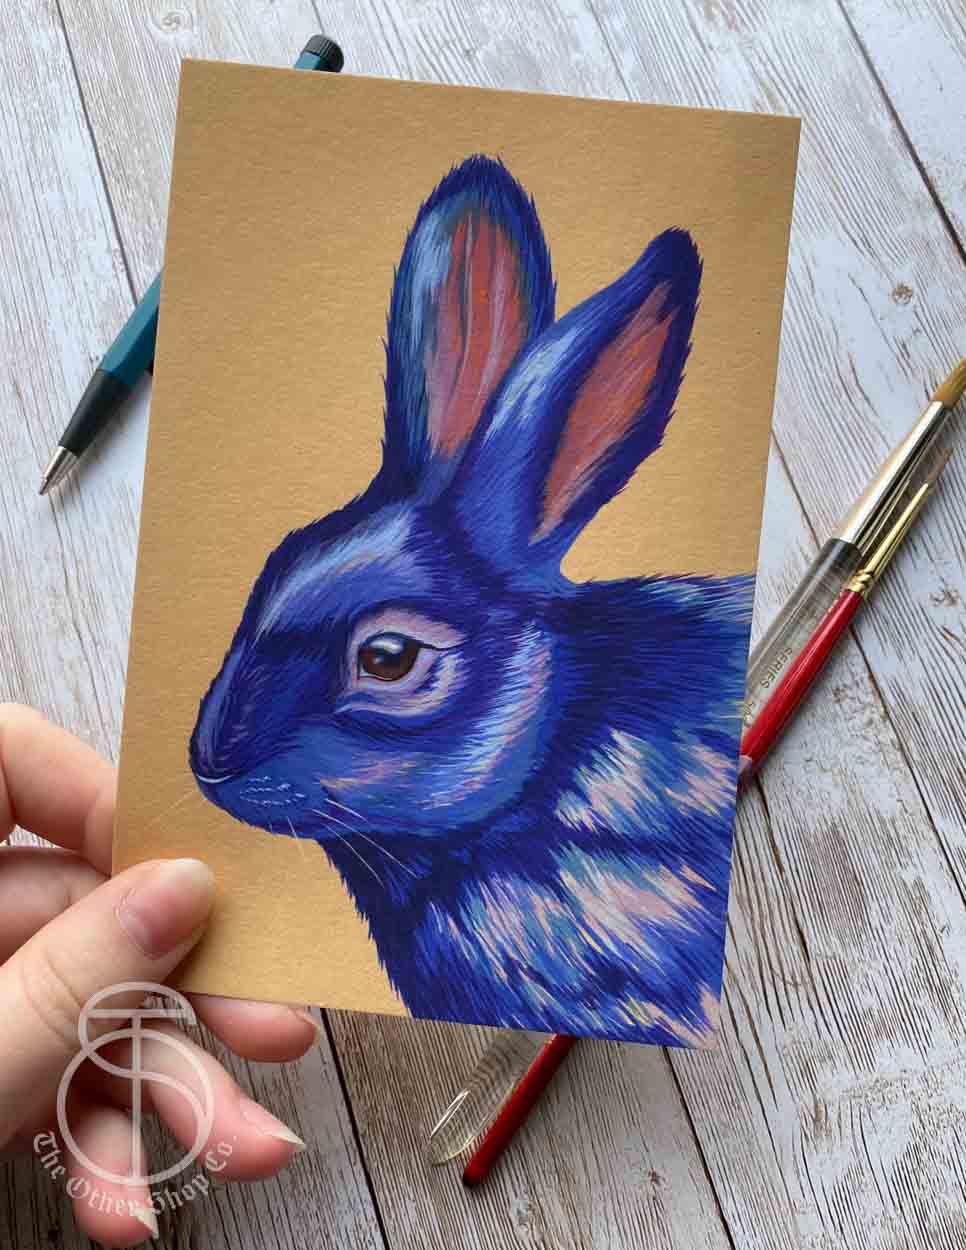 Blue Rabbit Art Print